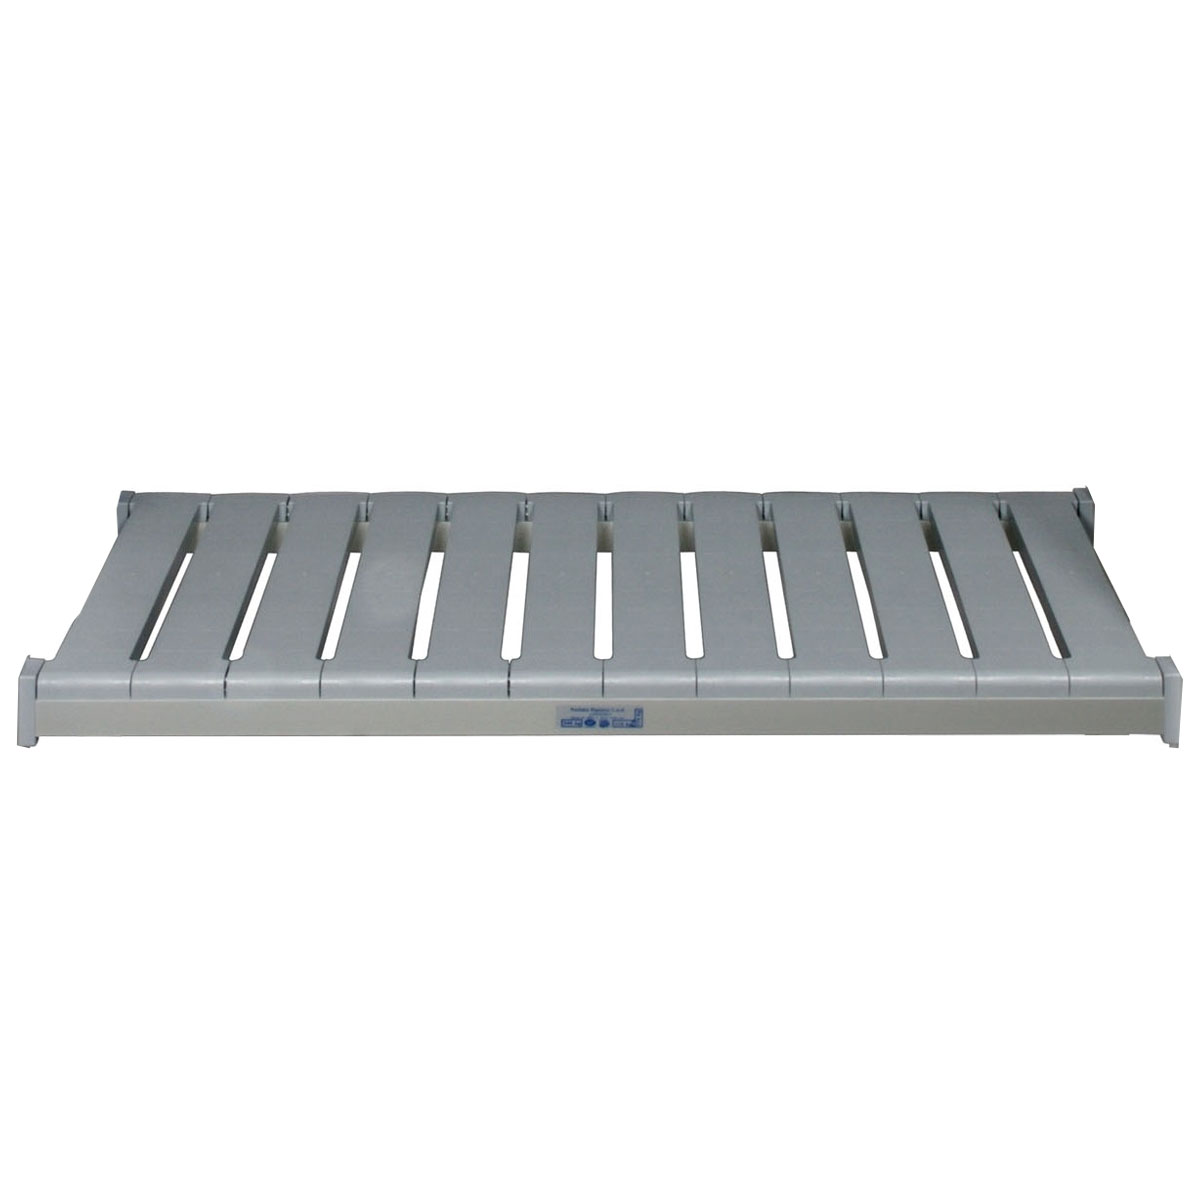 Eko Fit Polymer Range Additional Shelf - W770 x D525mm - KFS525